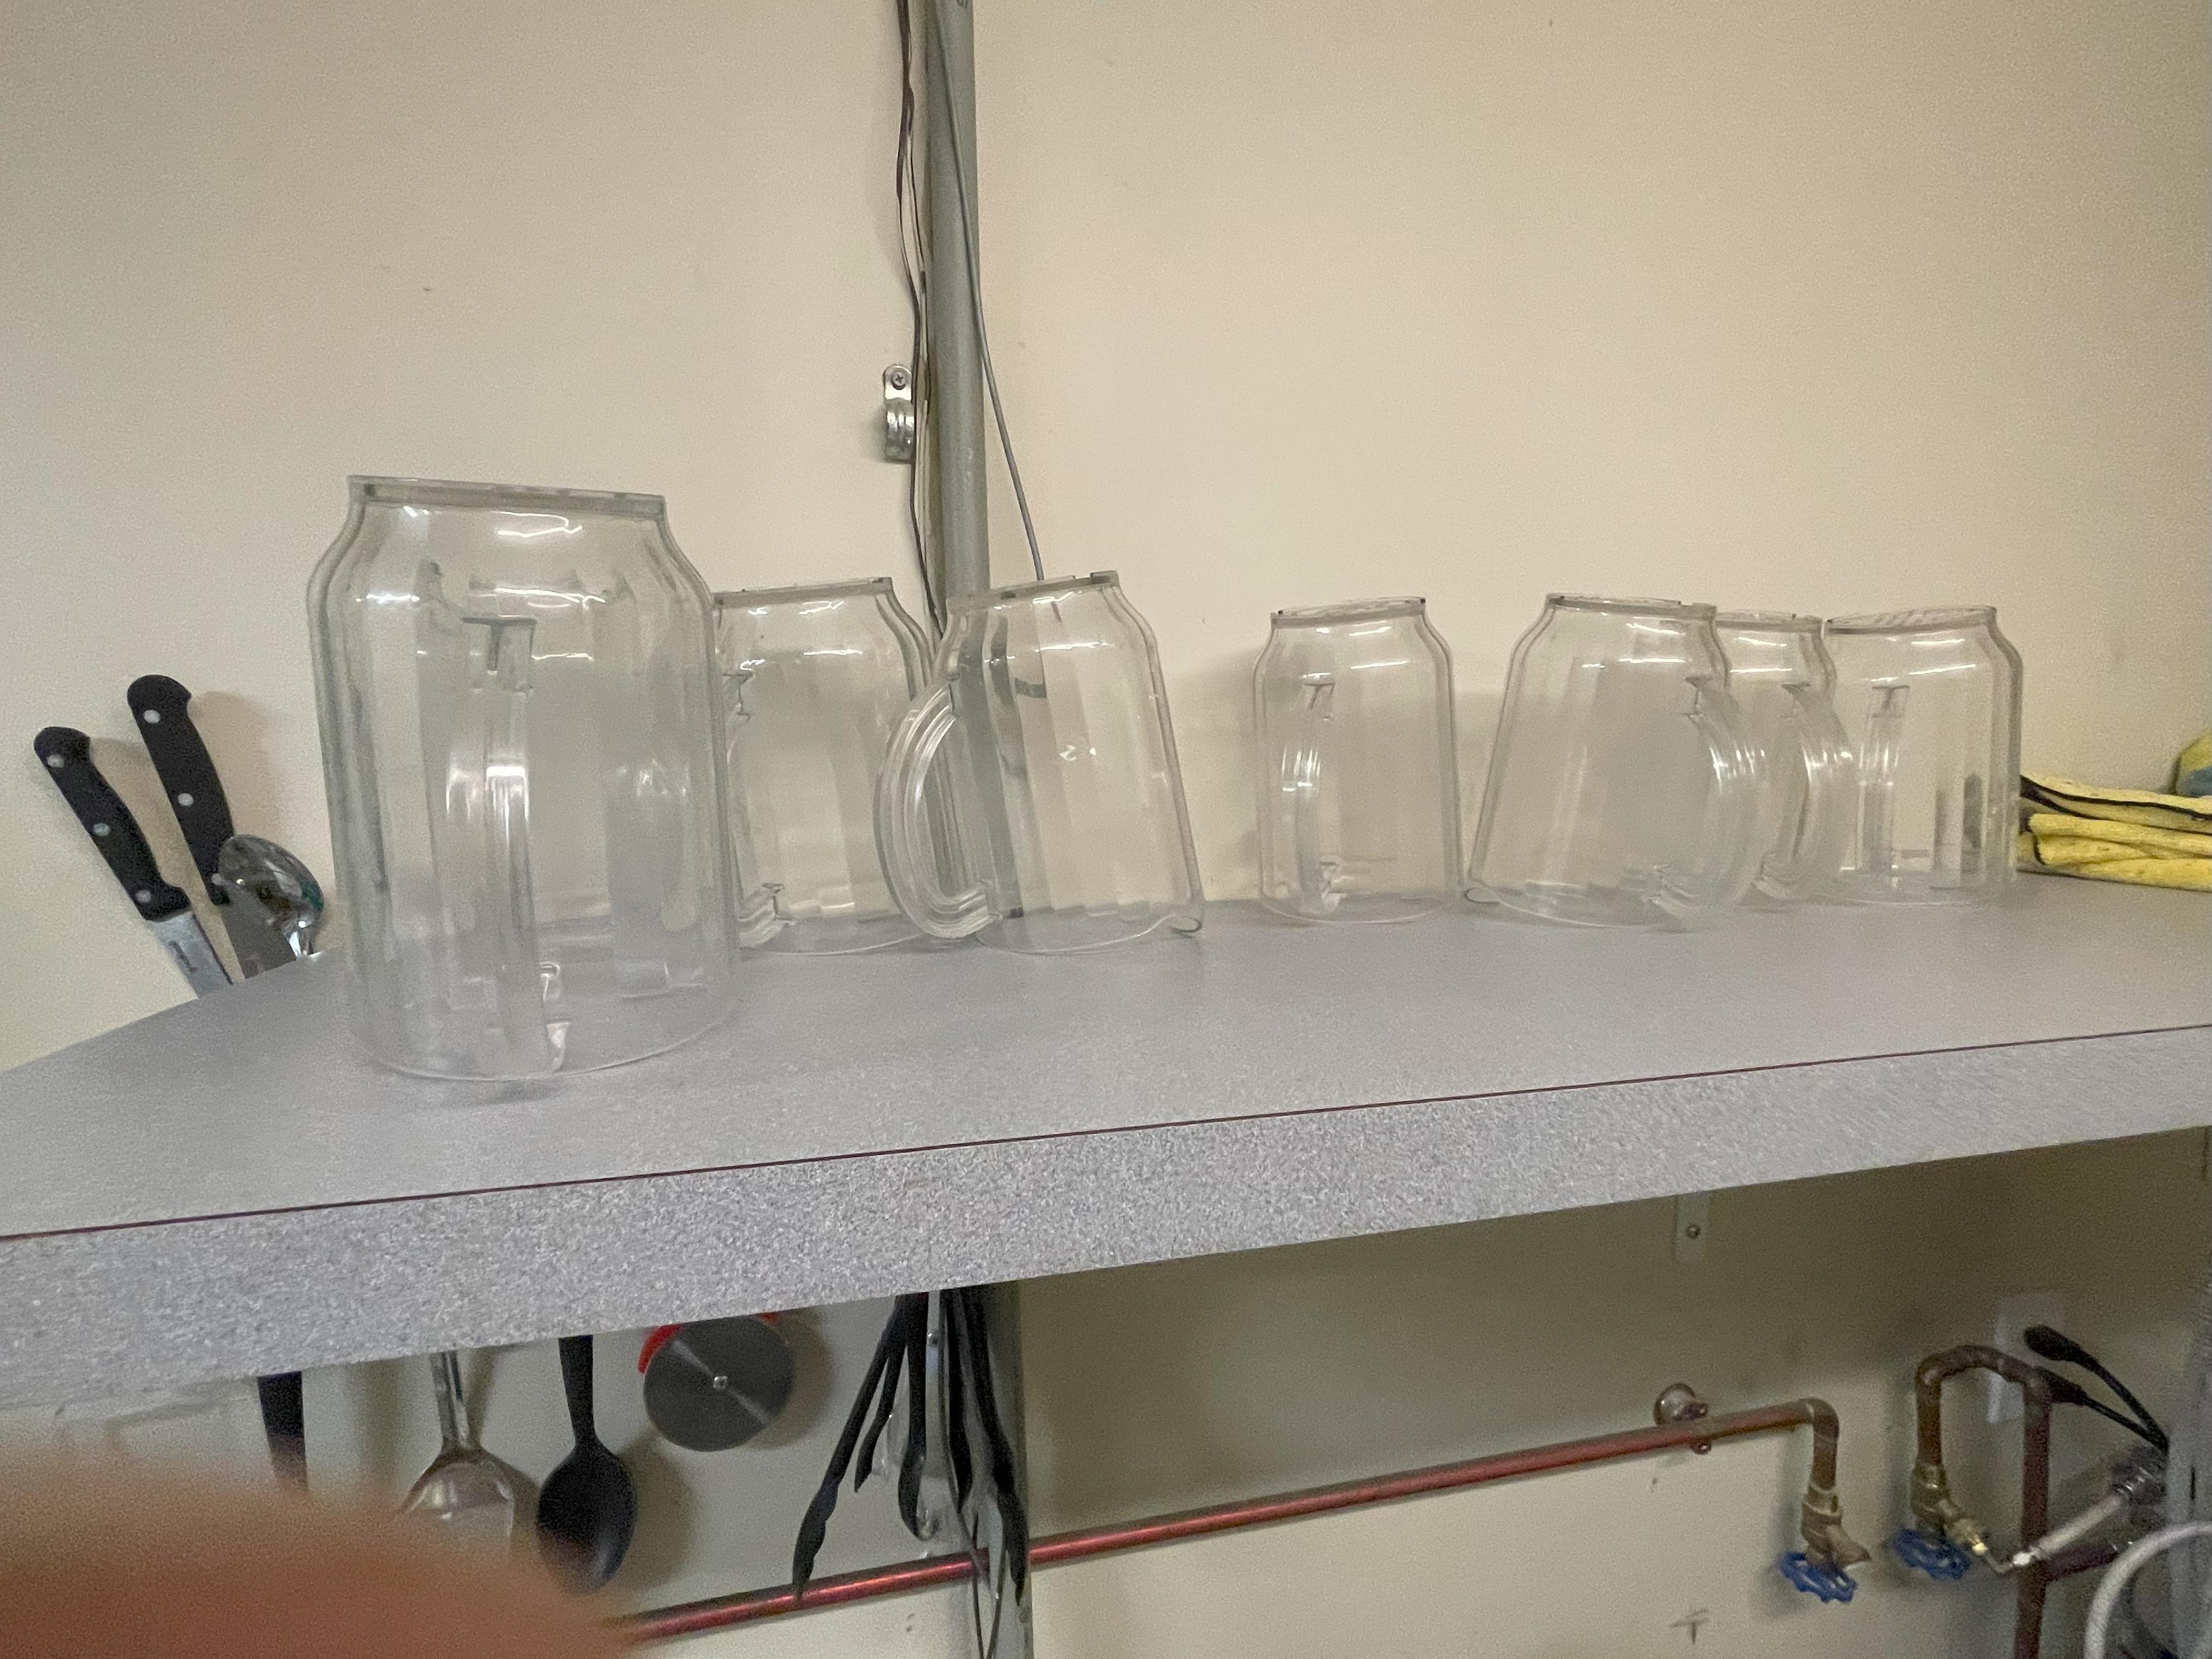 several plastic pitchers